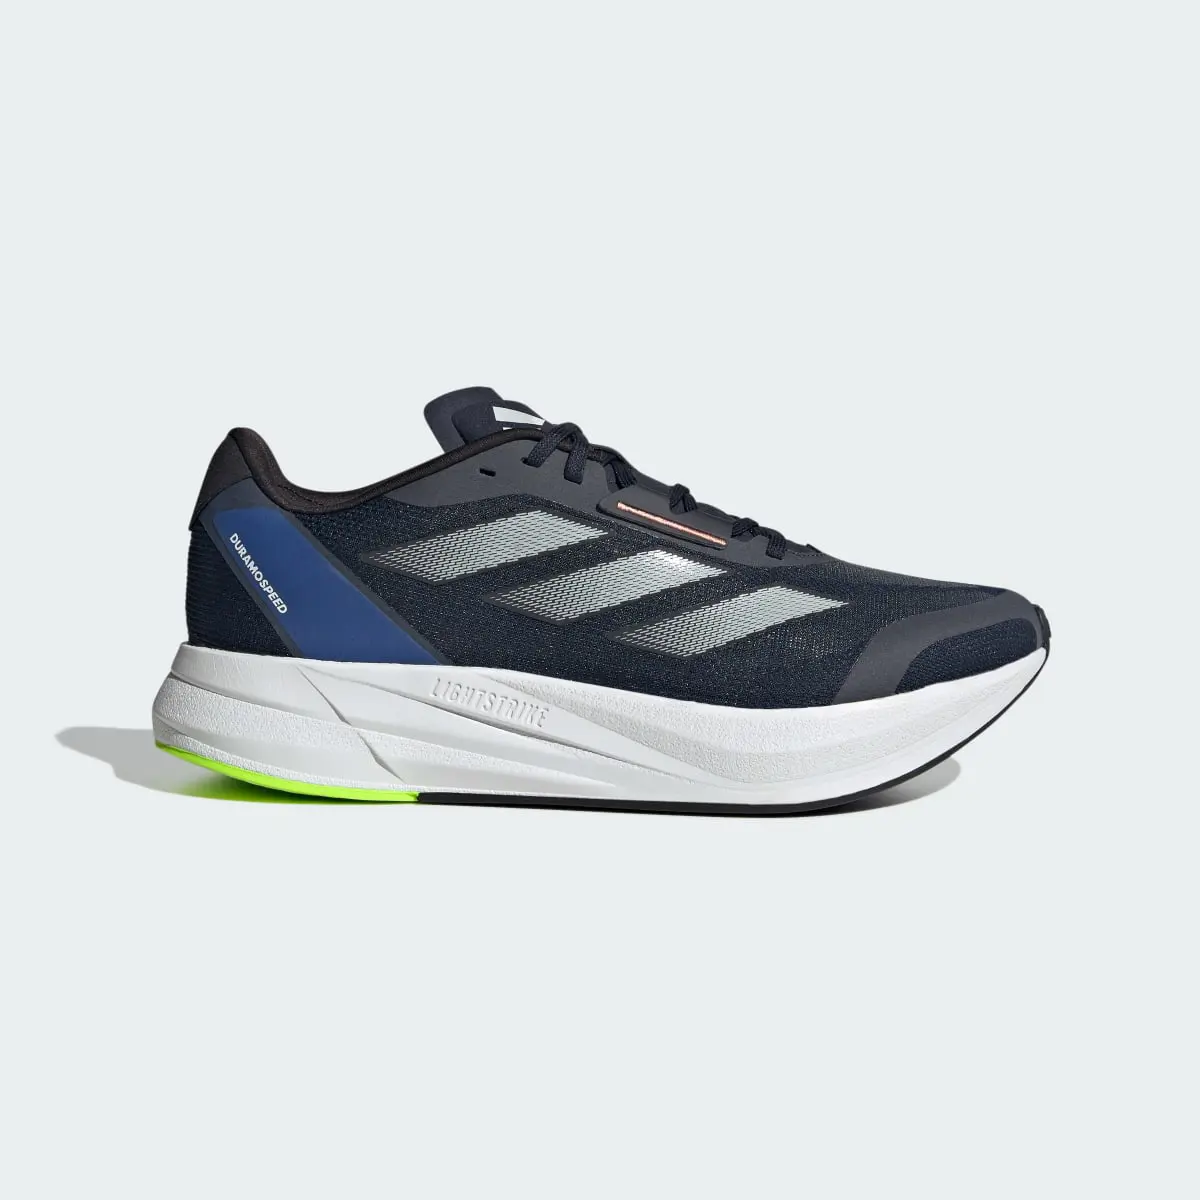 Adidas Duramo Speed Running Shoes. 2